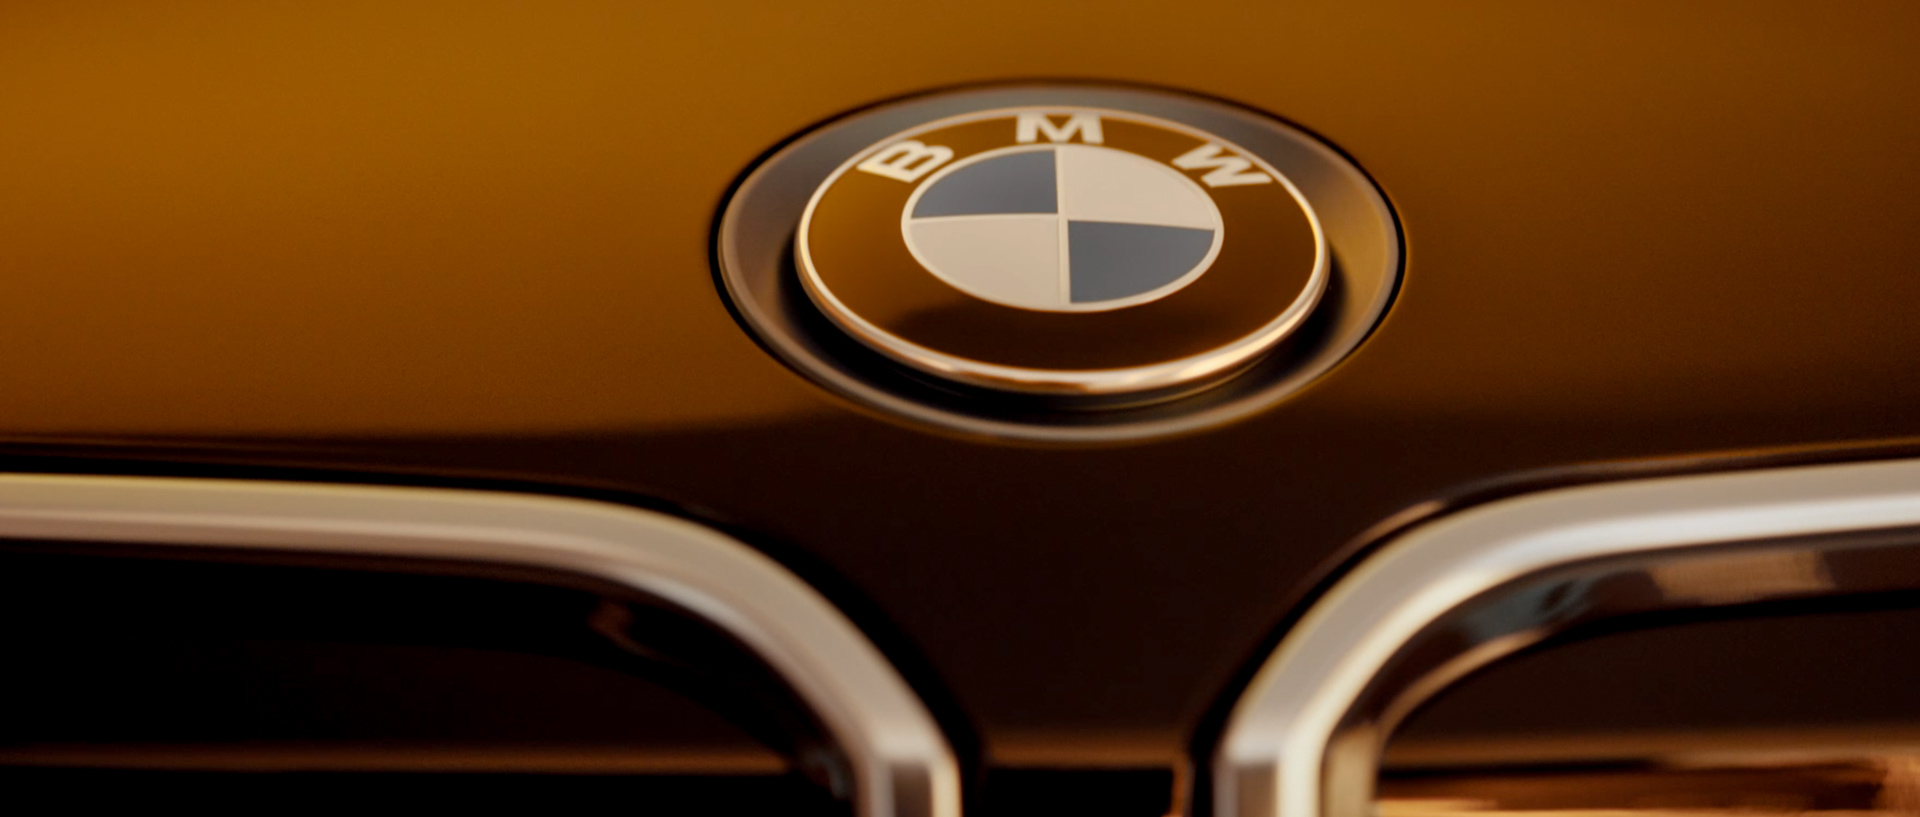 BMW-ForSite-Temp-5.jpg